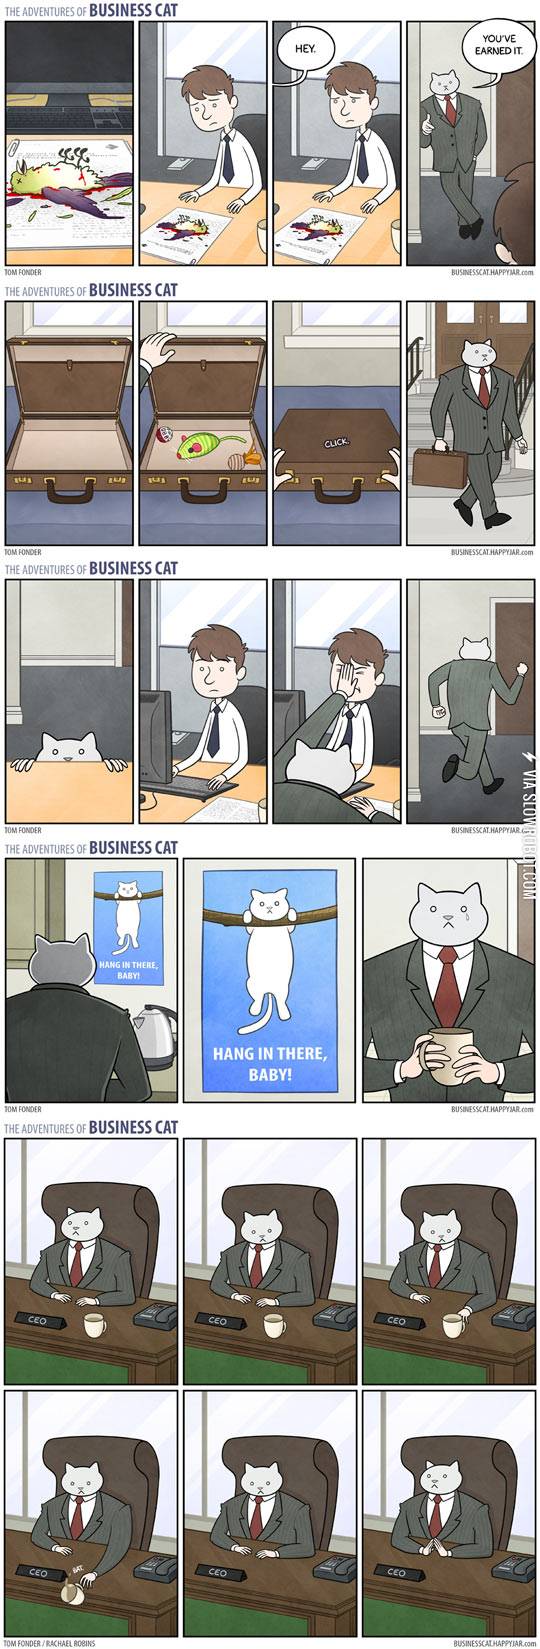 Business+cat.